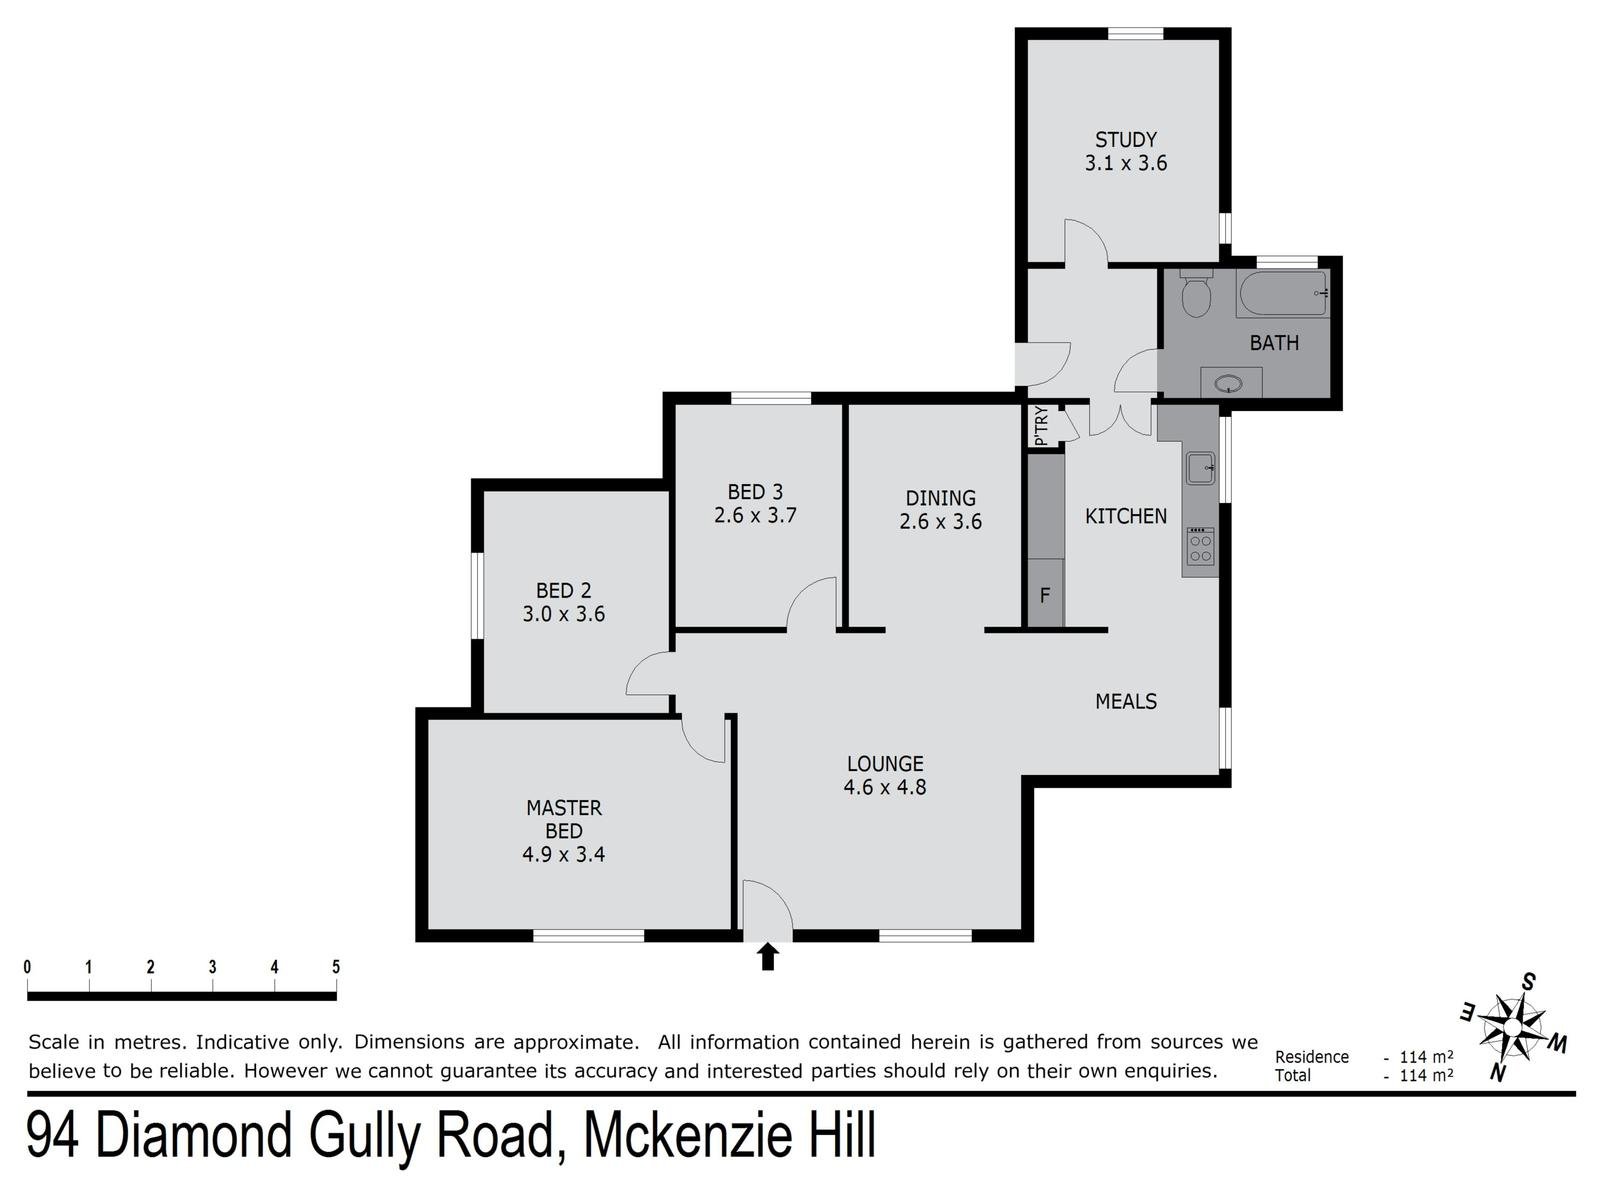 94 Diamond Gully Road, Mckenzie Hill image 7